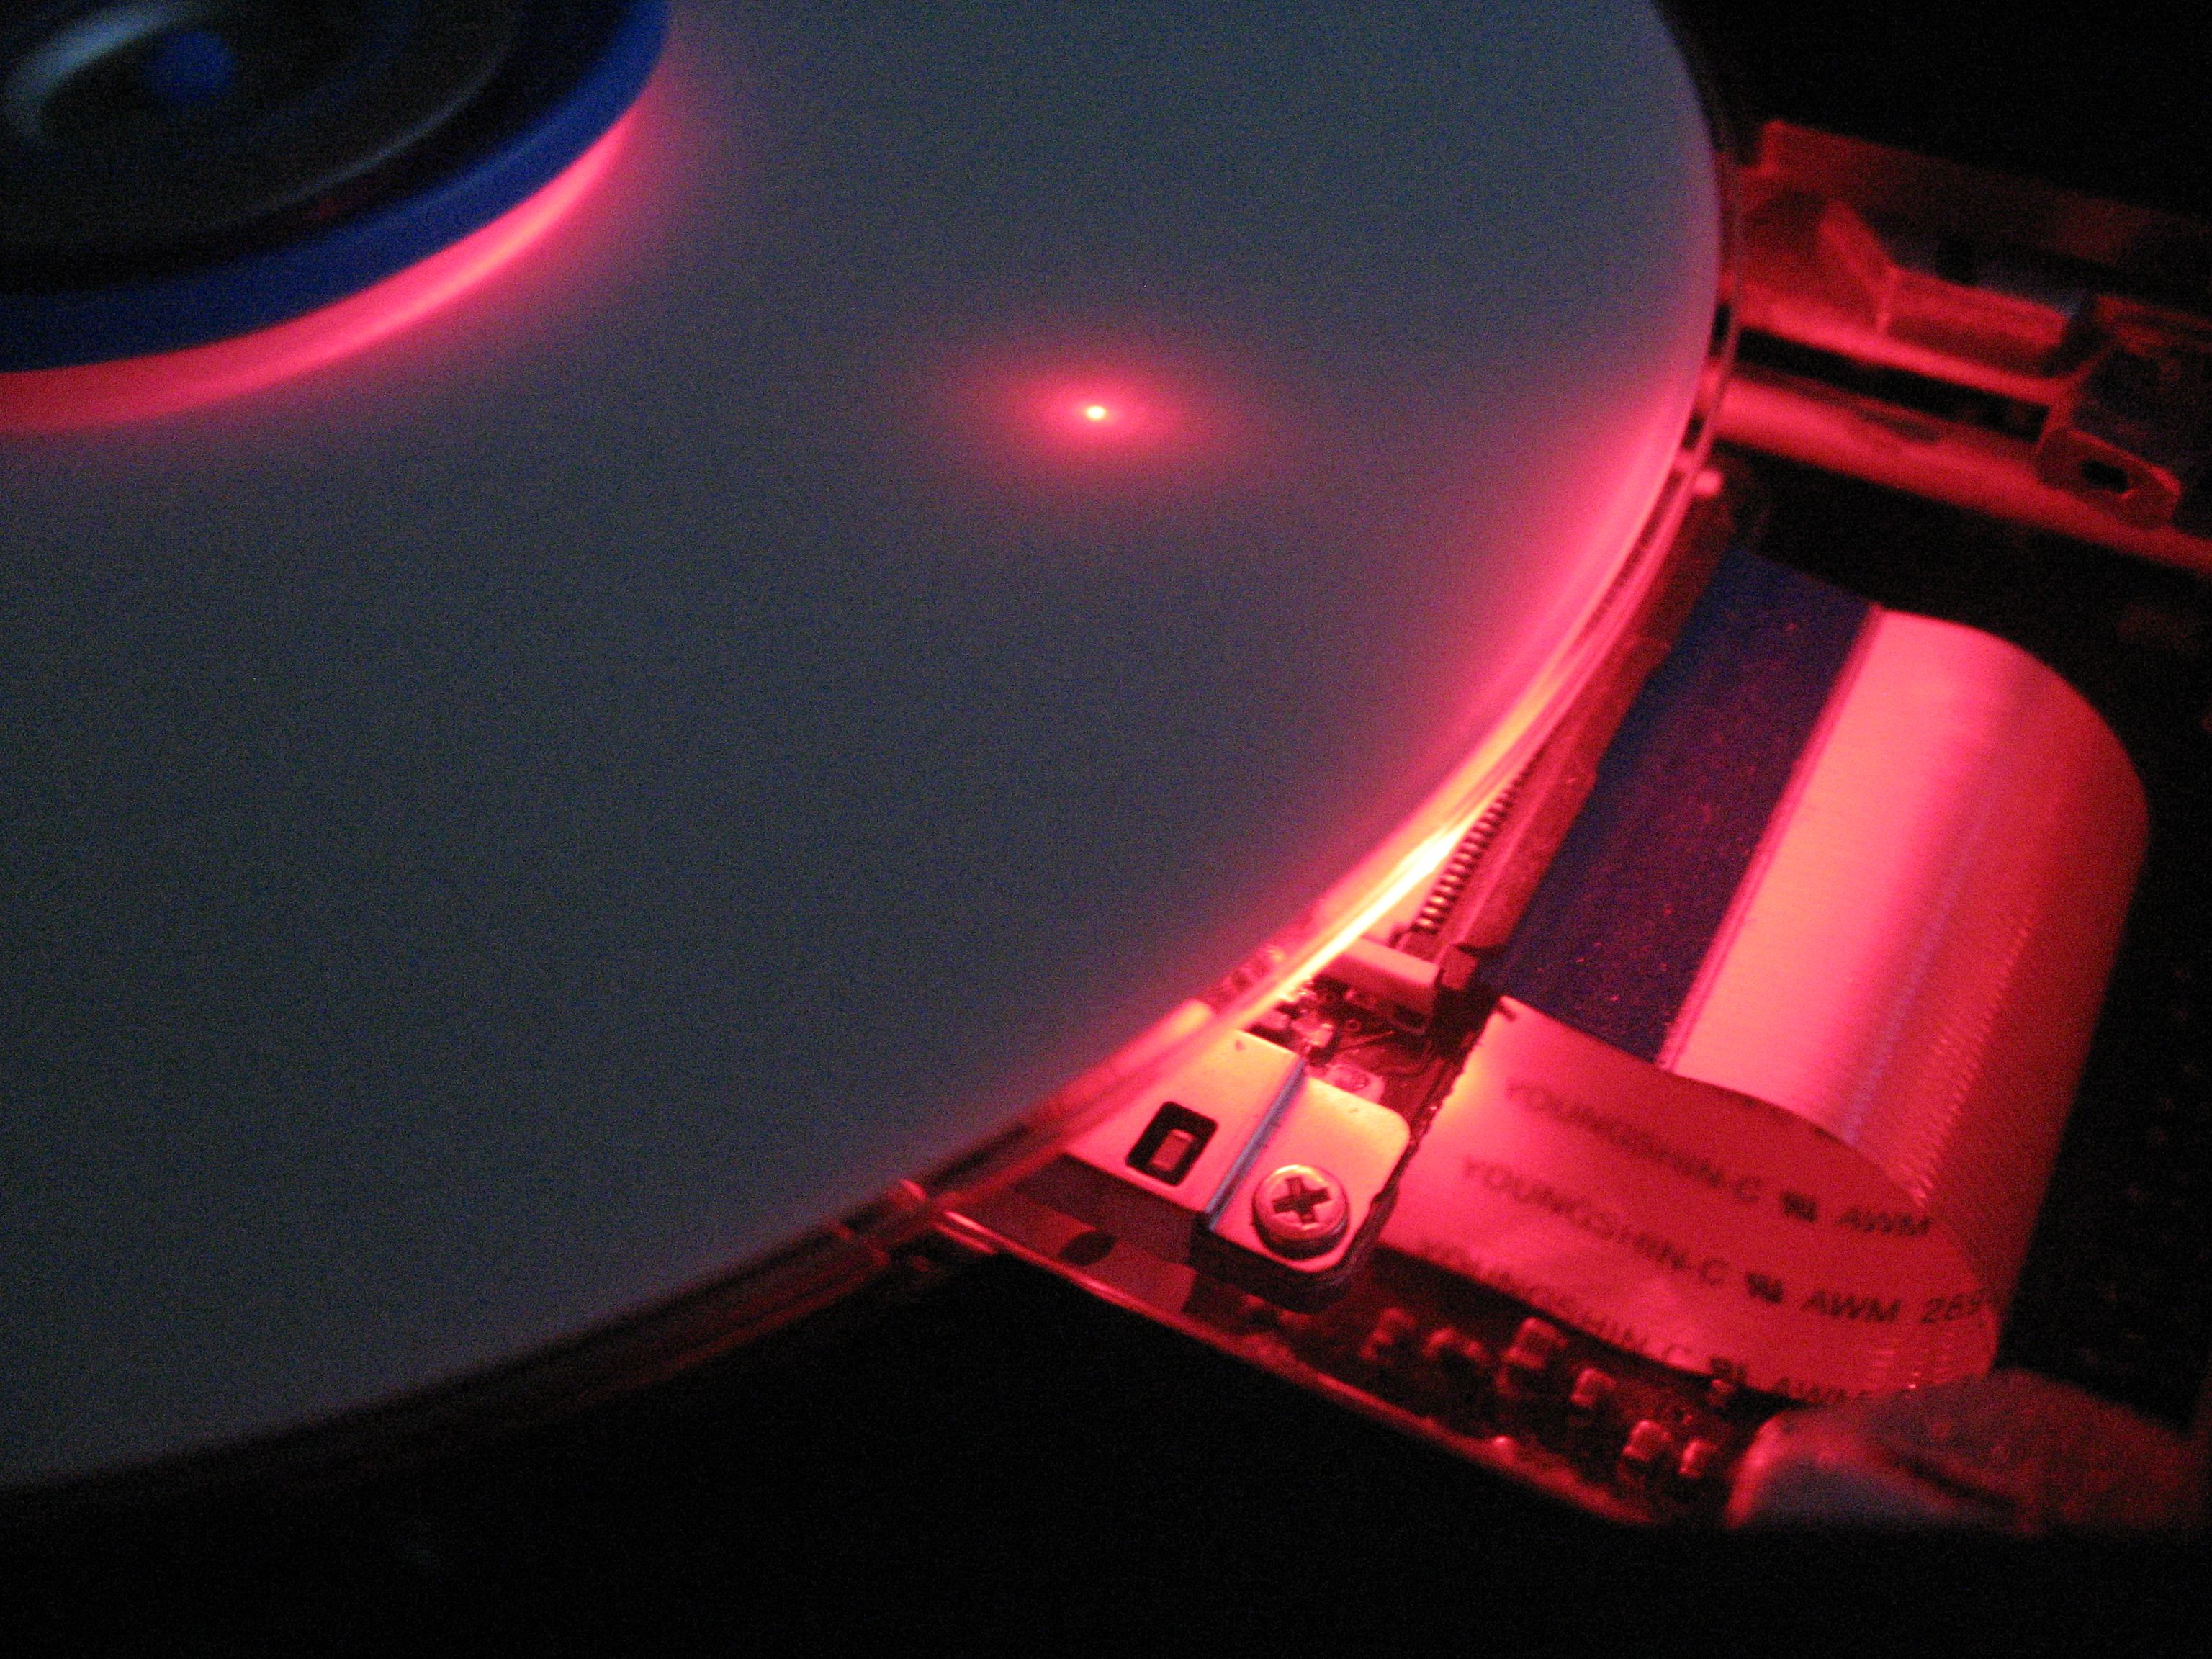 File:Dvd-burning-cutaway2.JPG - Wikimedia Commons